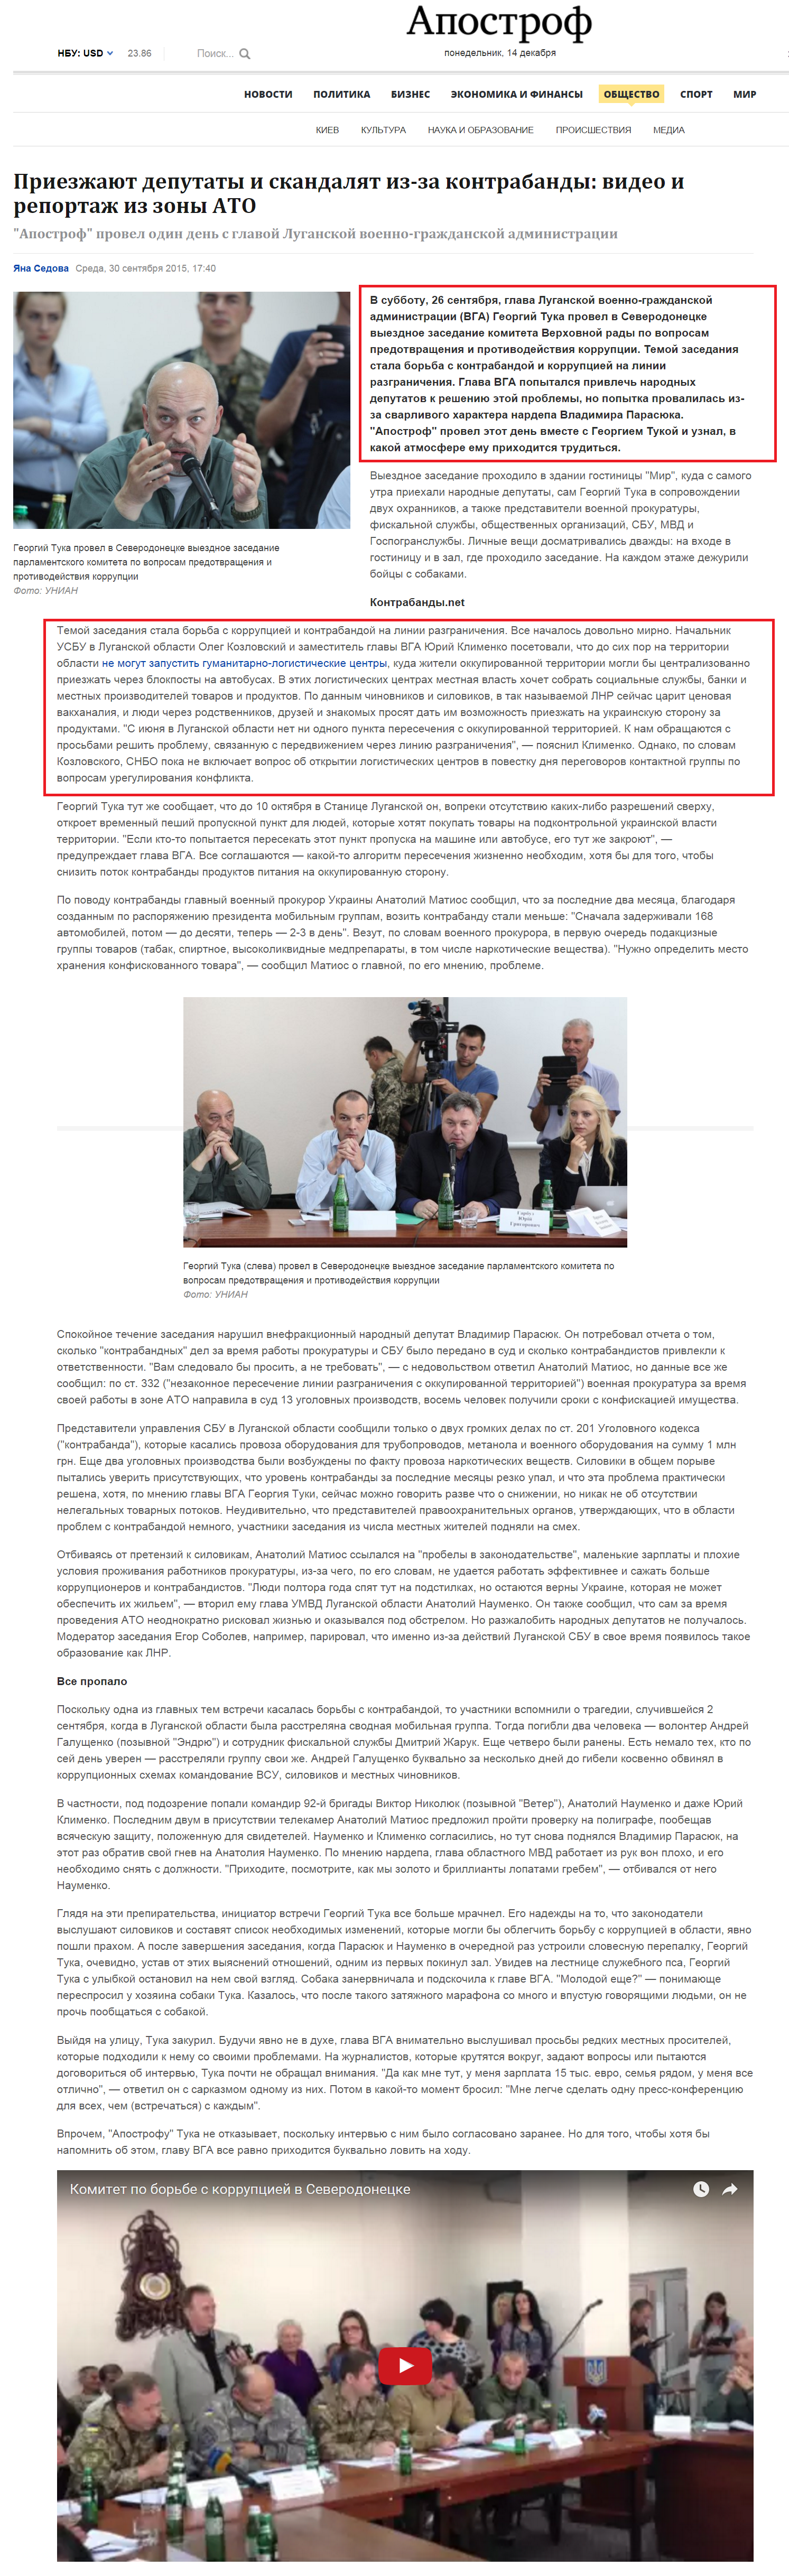 http://apostrophe.com.ua/article/society/2015-09-30/nardepyi-ustroili-skandal-no-kontrabandu-v-lnr-ne-poboroli-video-i-reportaj-iz-zonyi-ato/2337